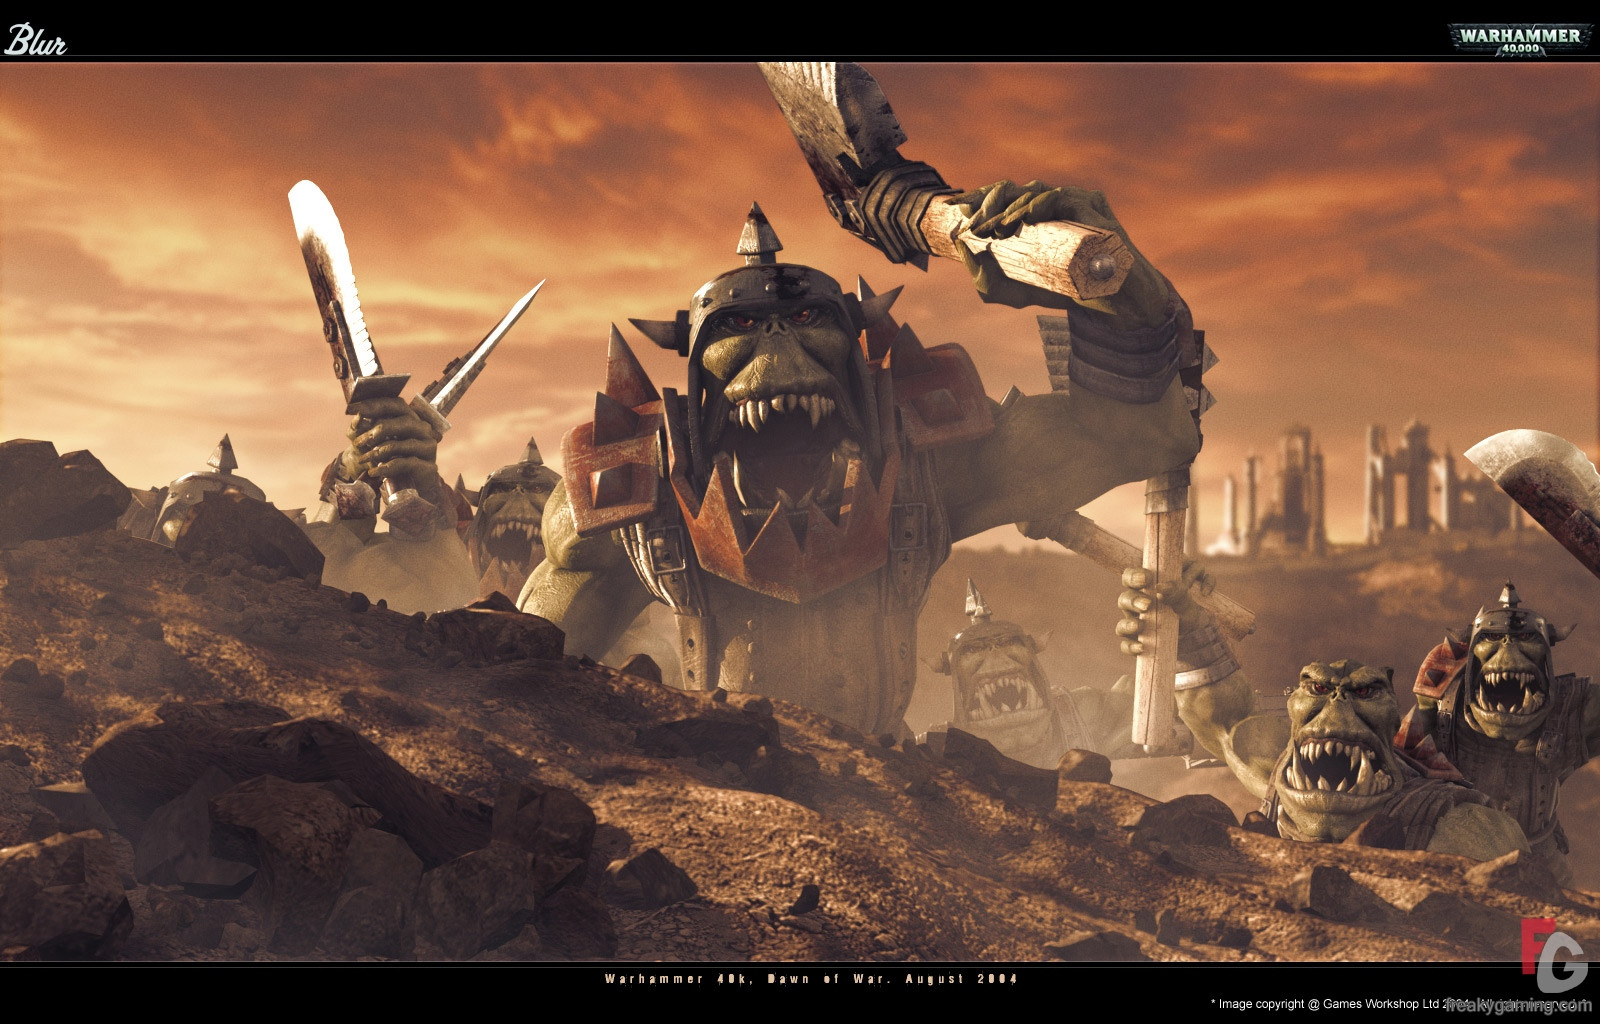 Free Download Warhammer 40k Ork Wallpaper Warhammer 40k Ork Images, Photos, Reviews